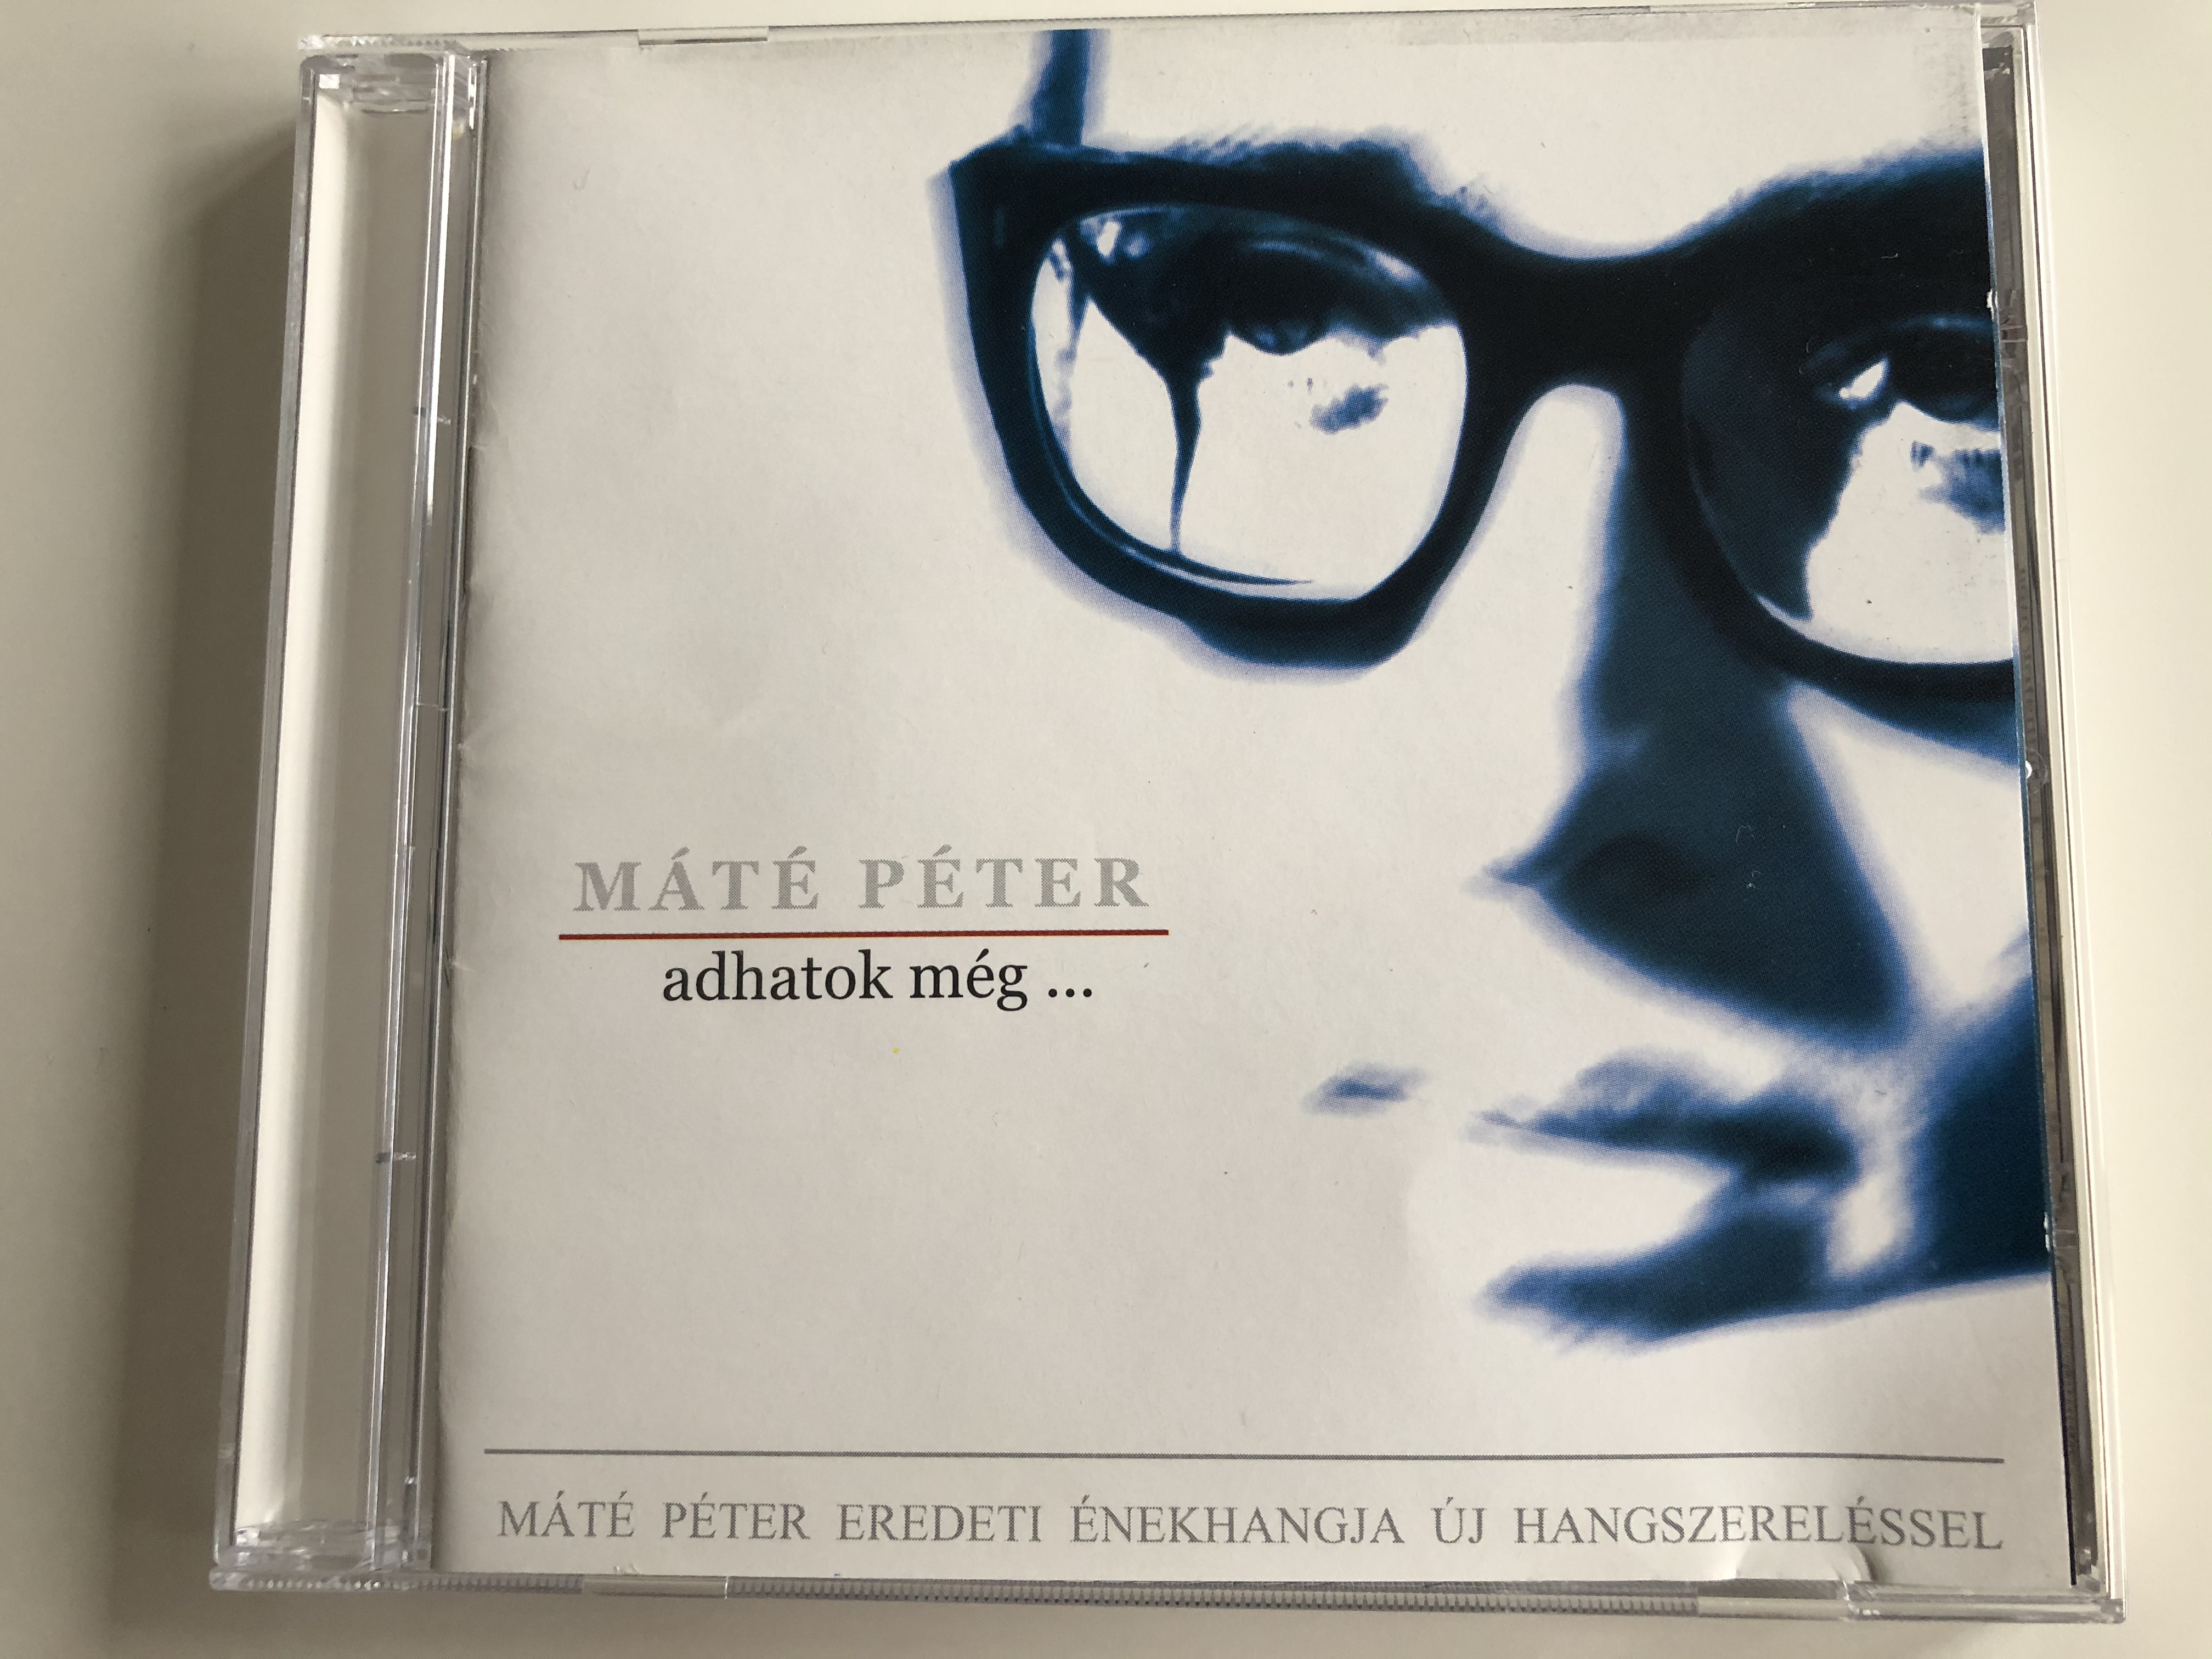 mate-peter-adhatok-meg...-mate-peter-eredeti-enekhangja-uj-hangszerelessel-hungaroton-audio-cd-2000-hcd-37891-1-.jpg